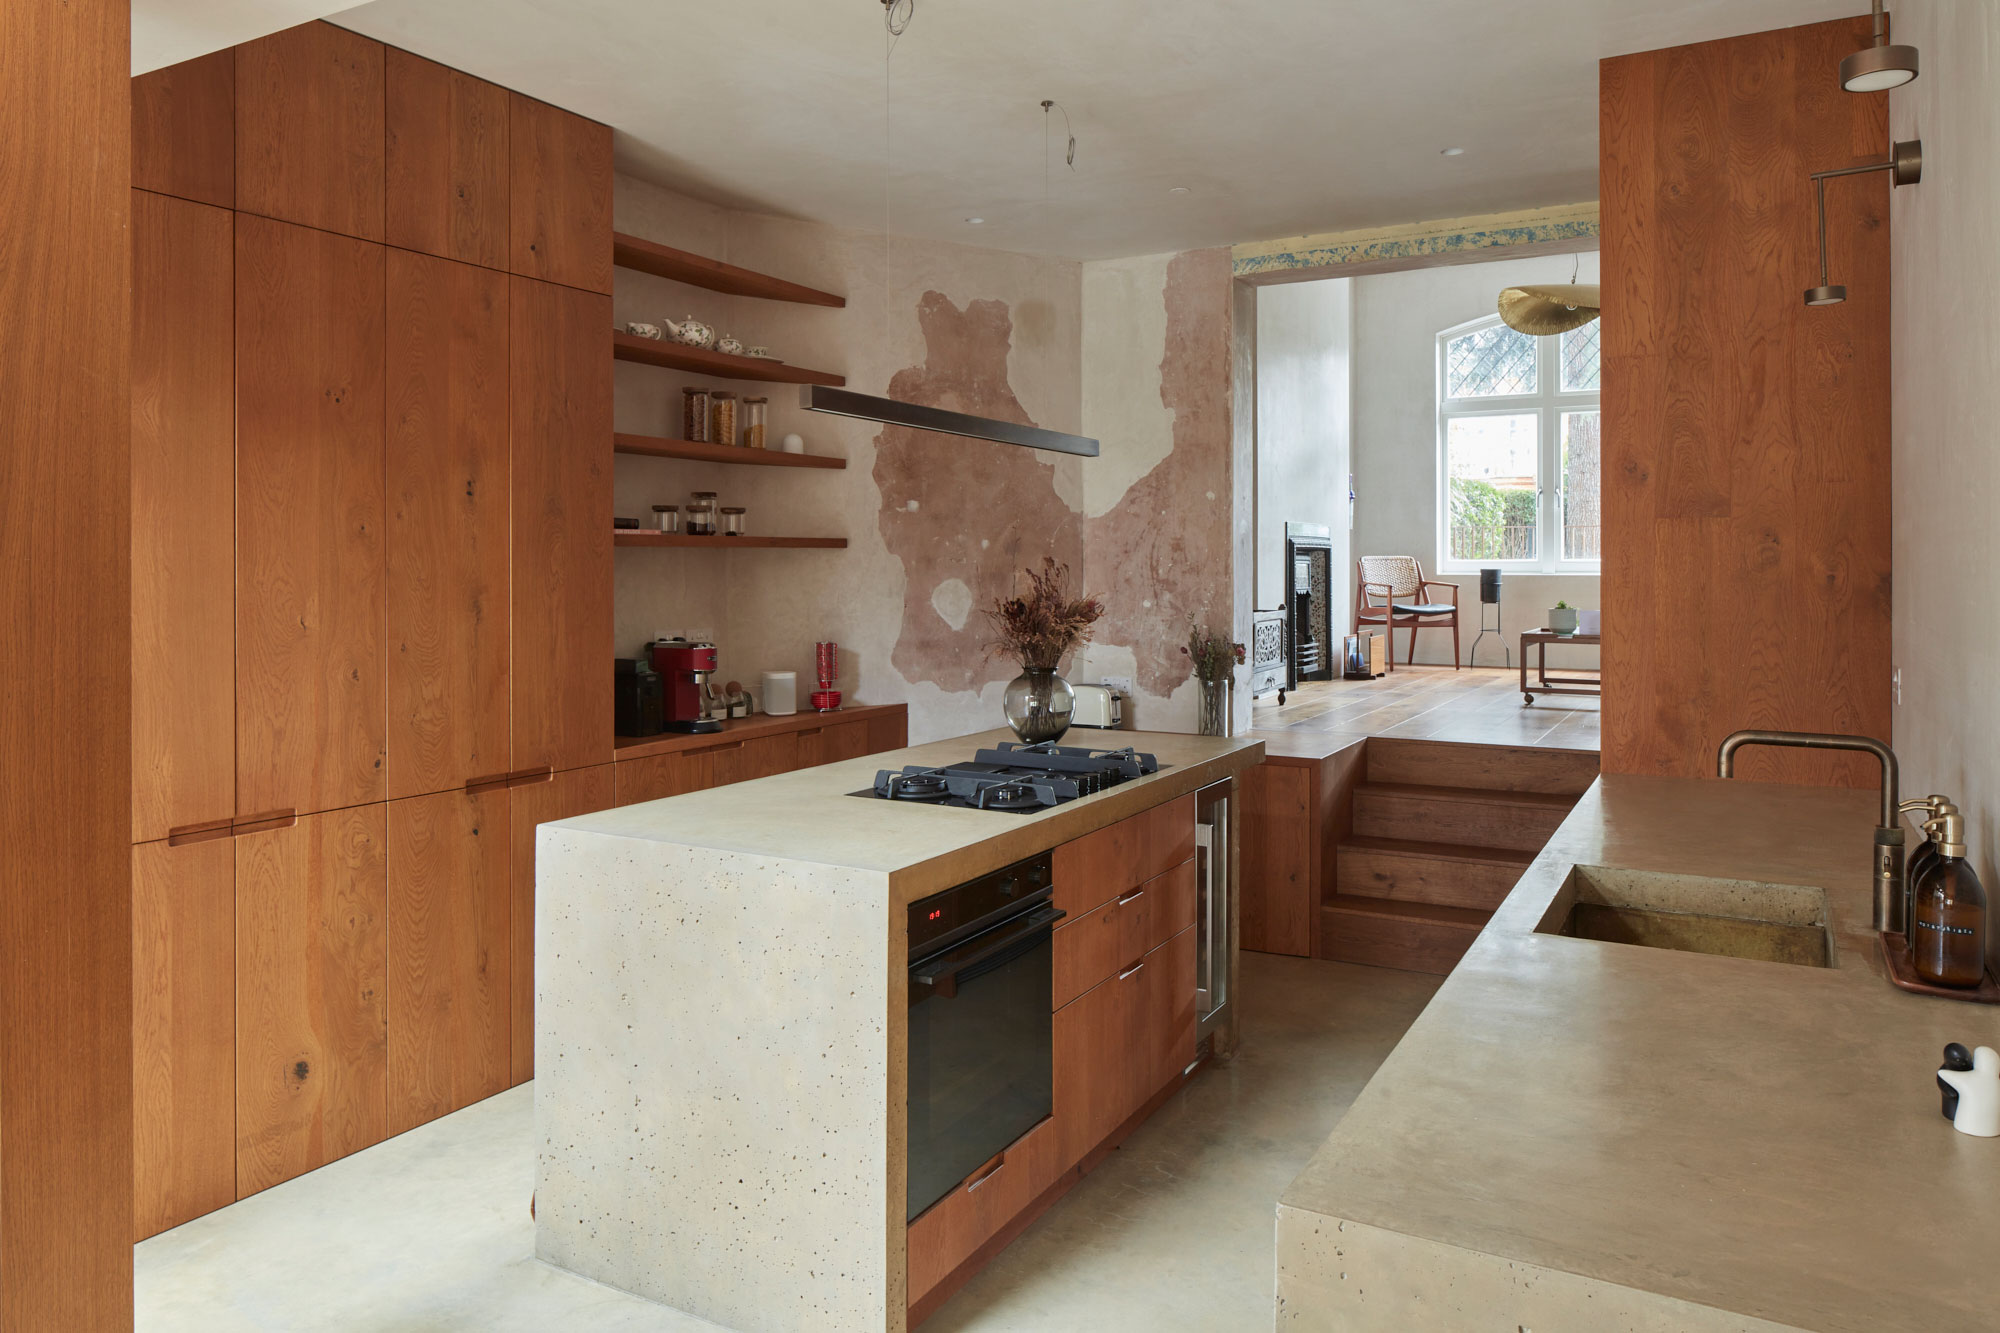 Open plan kitchen with concrete kitchen island